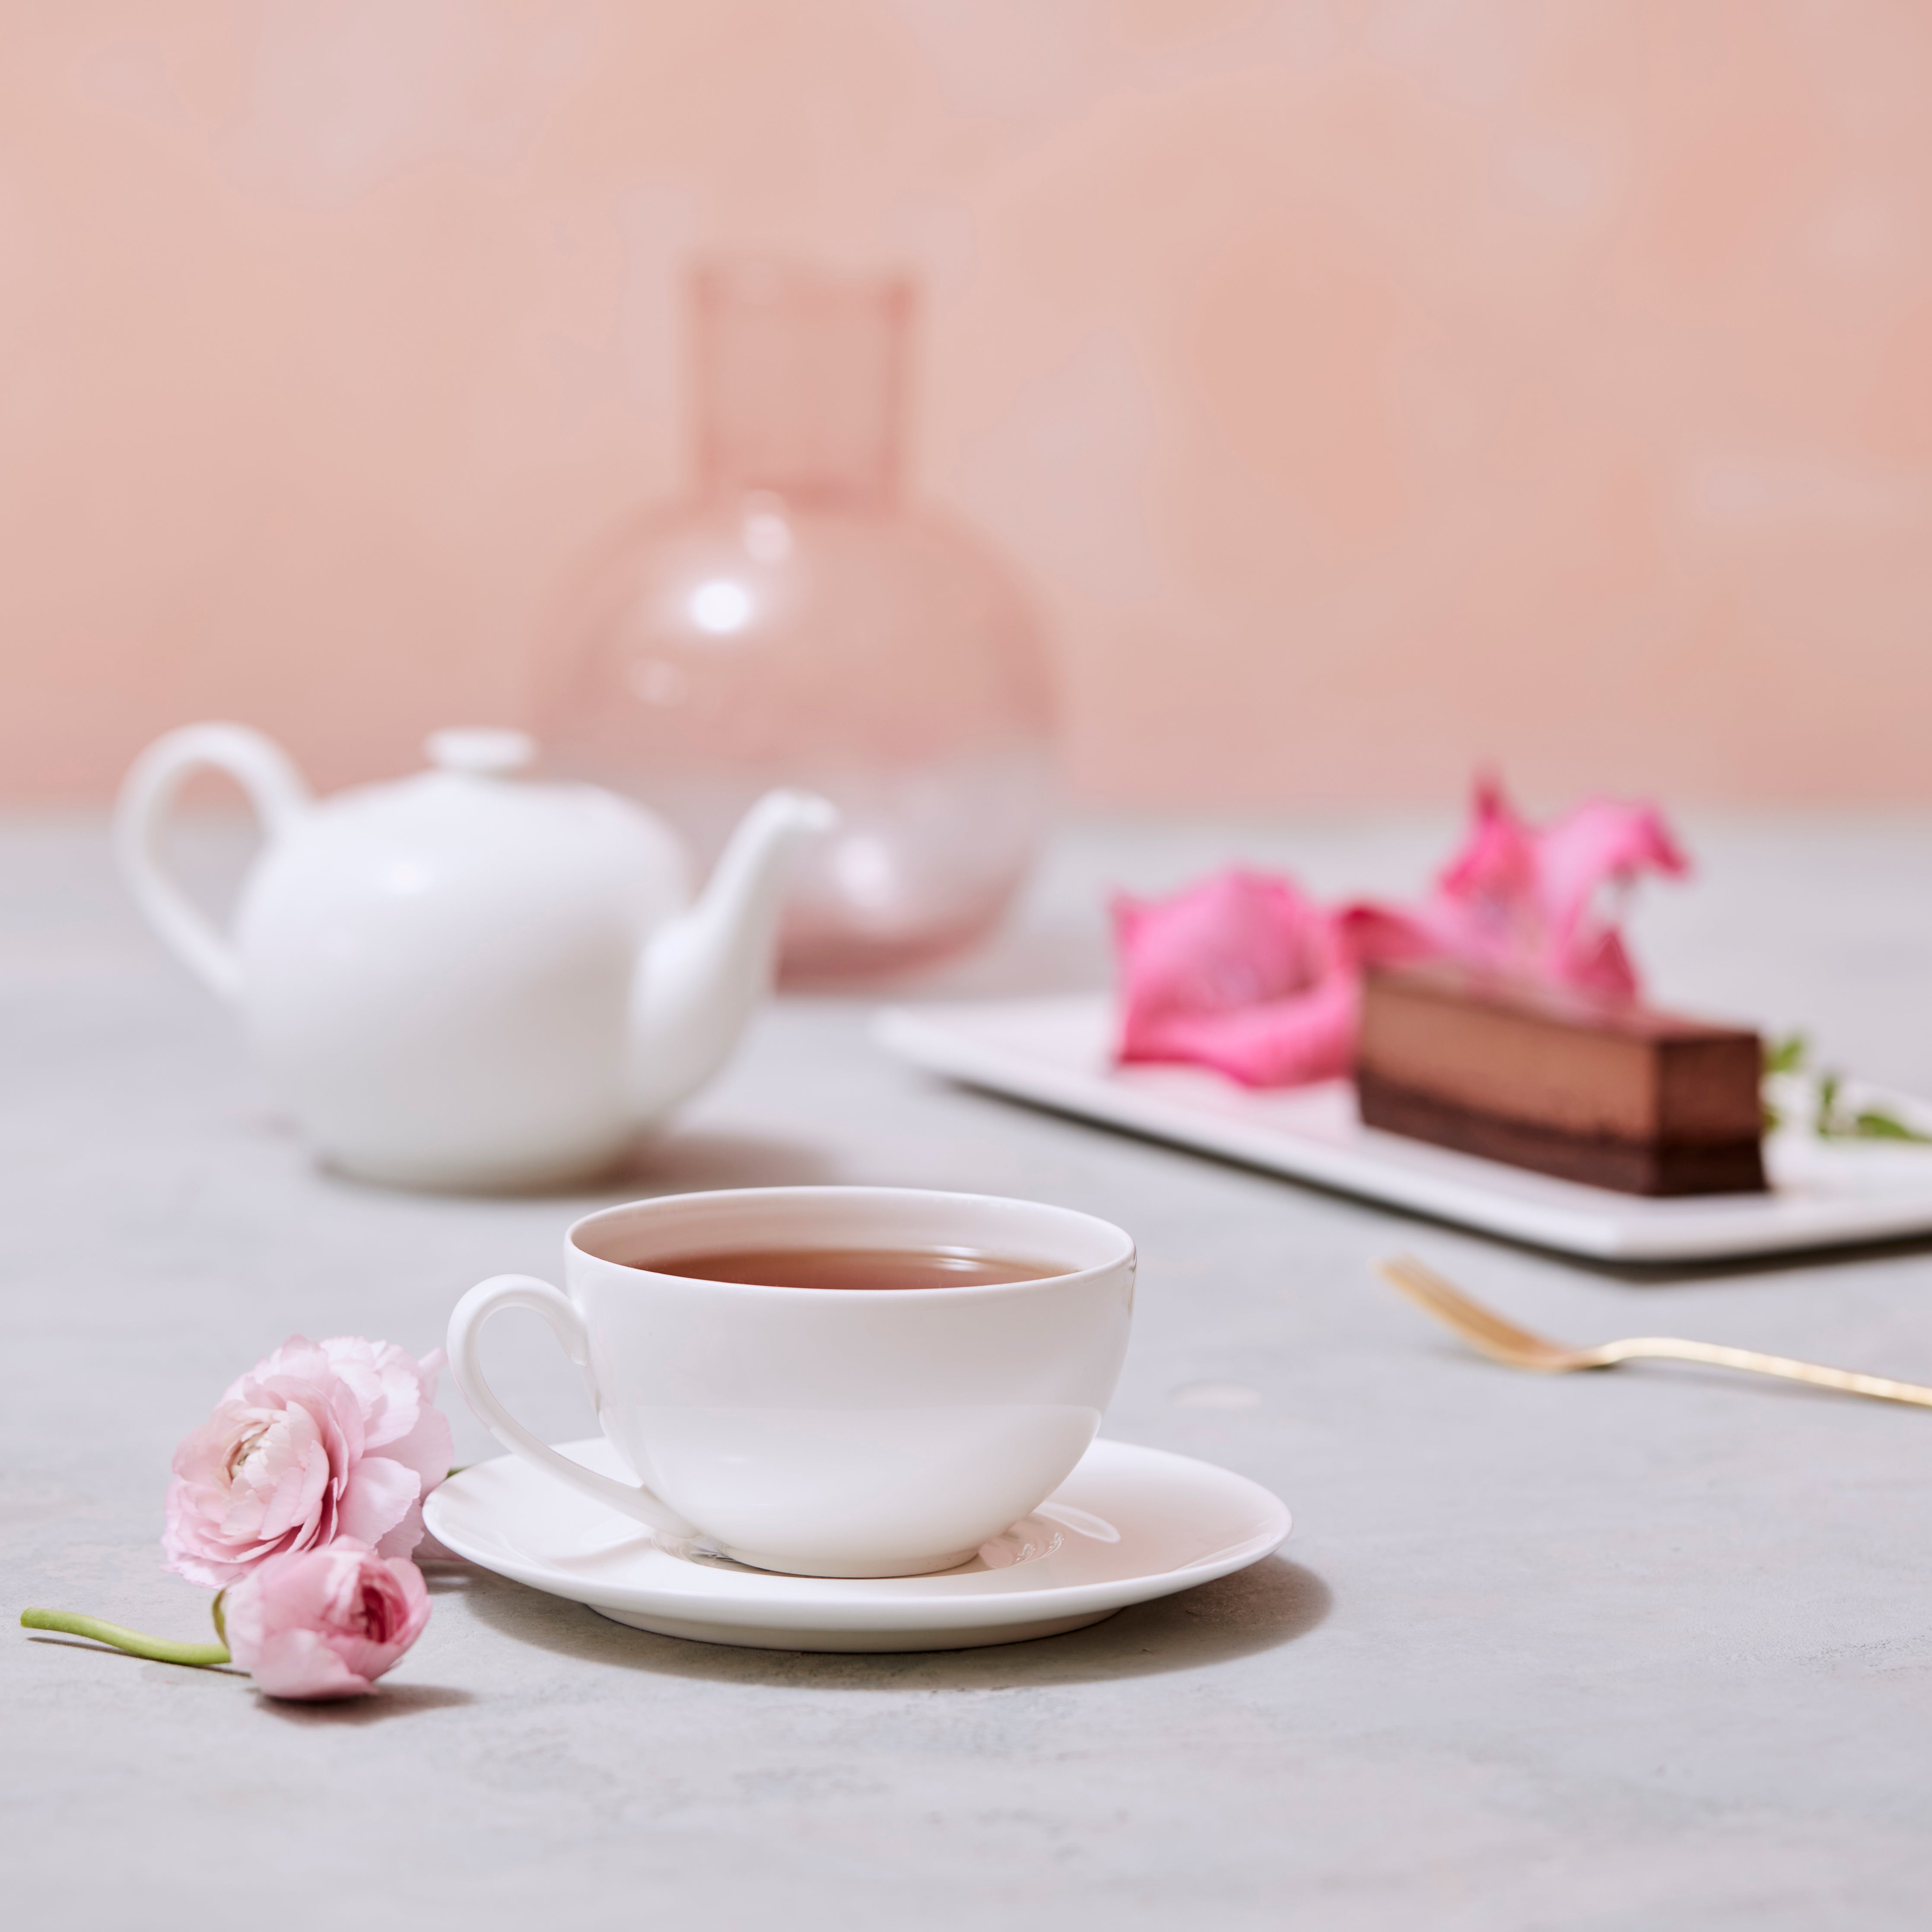 Imperial Earl Grey – Ikaati Tea